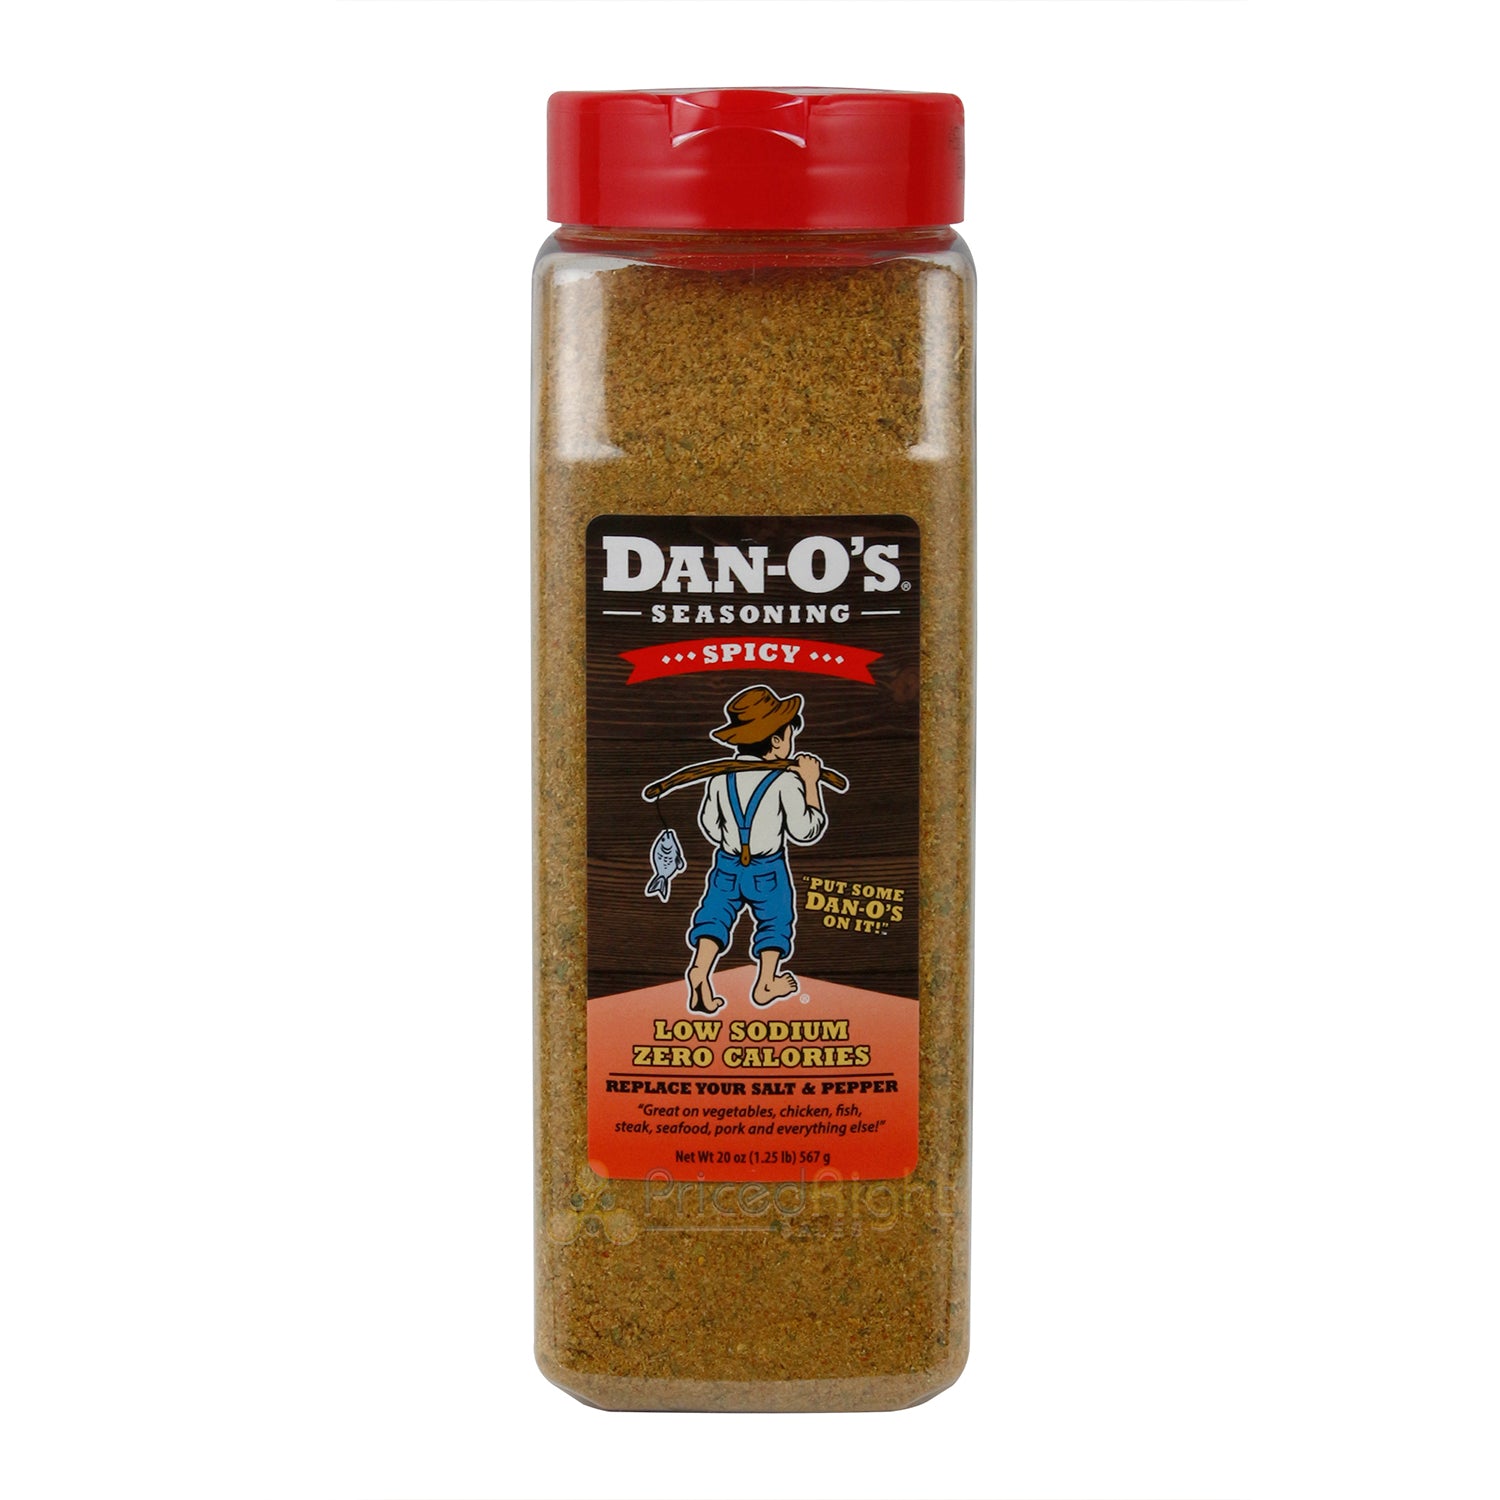 Spicy Dan-O's Original Seasoning - All Natural, Low Sodium, No MSG